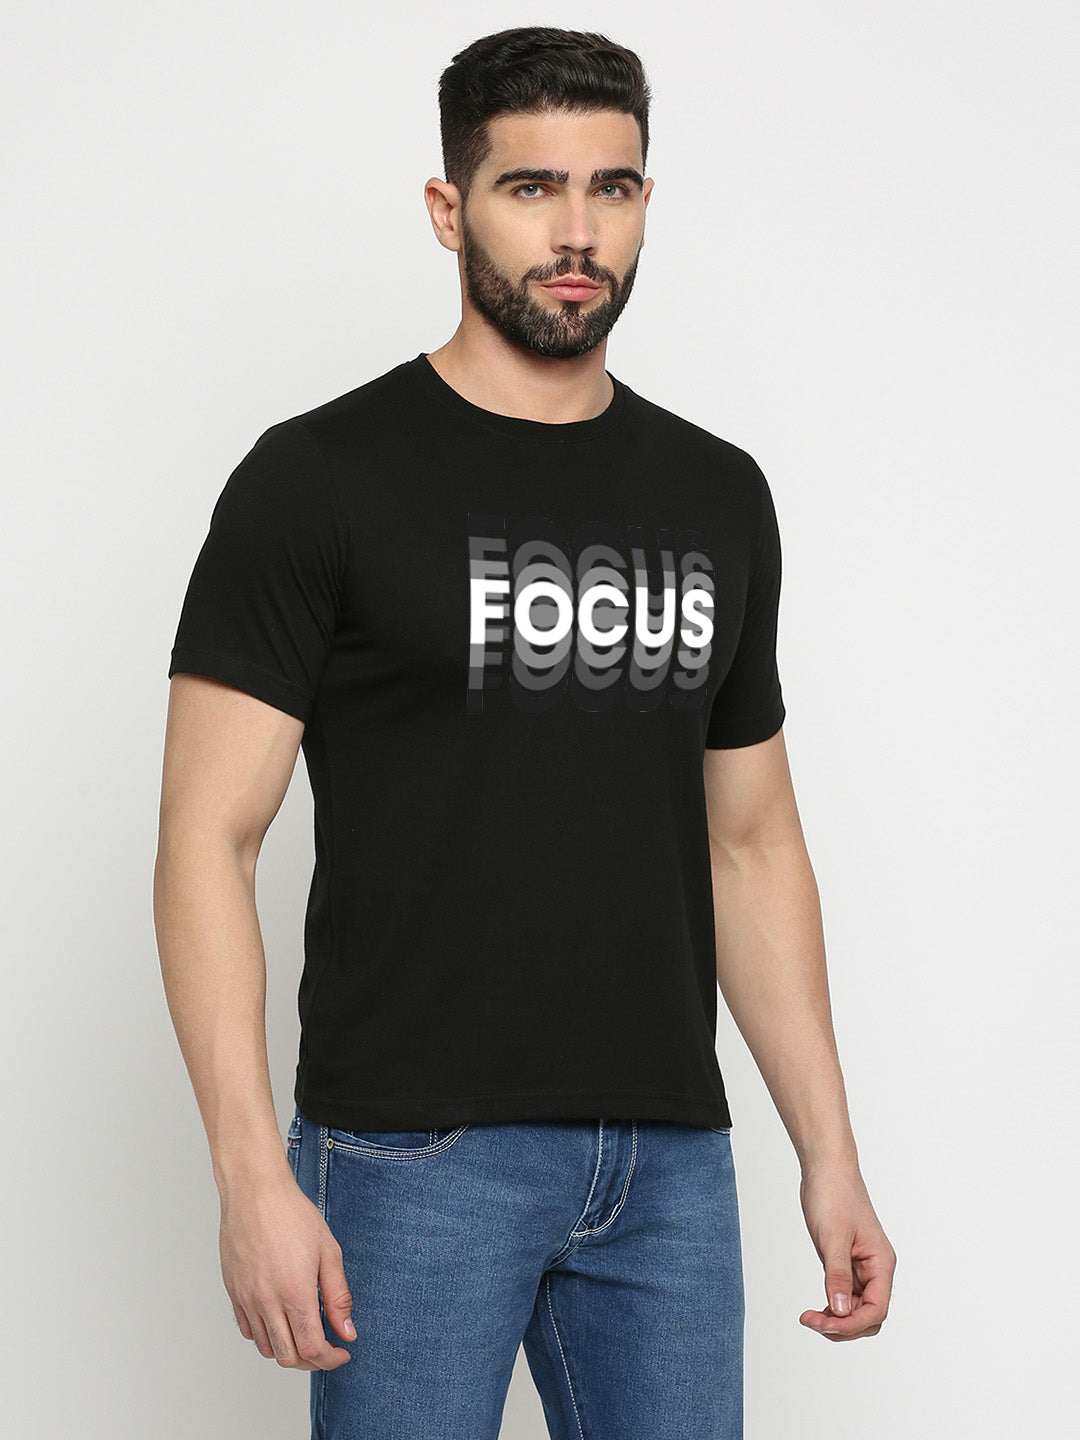 Focus Black T-Shirt